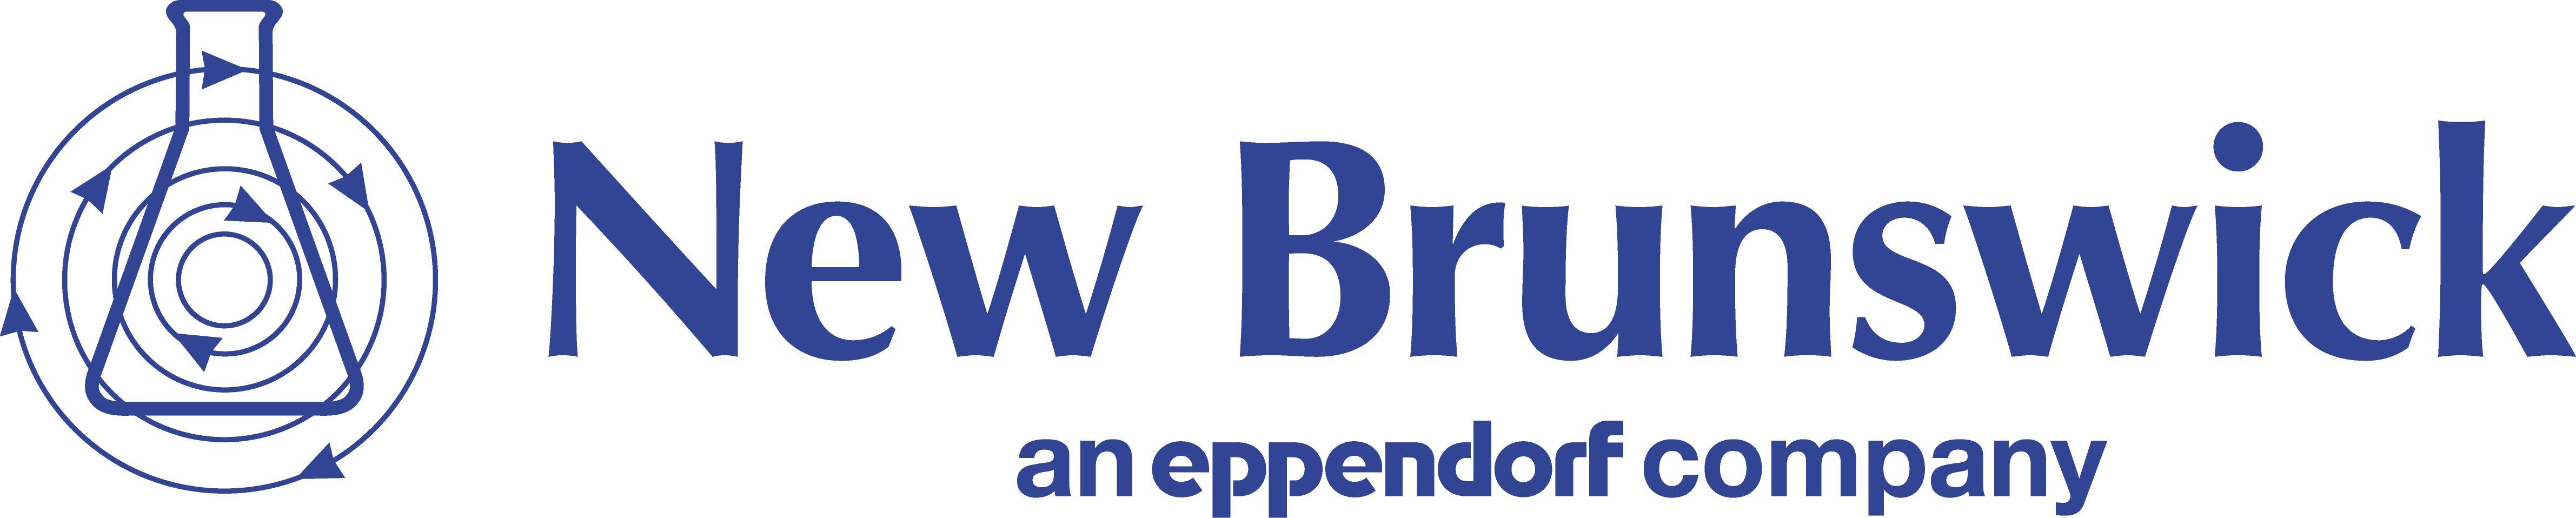 Eppendorf Logo - Index Of Files Image Brands